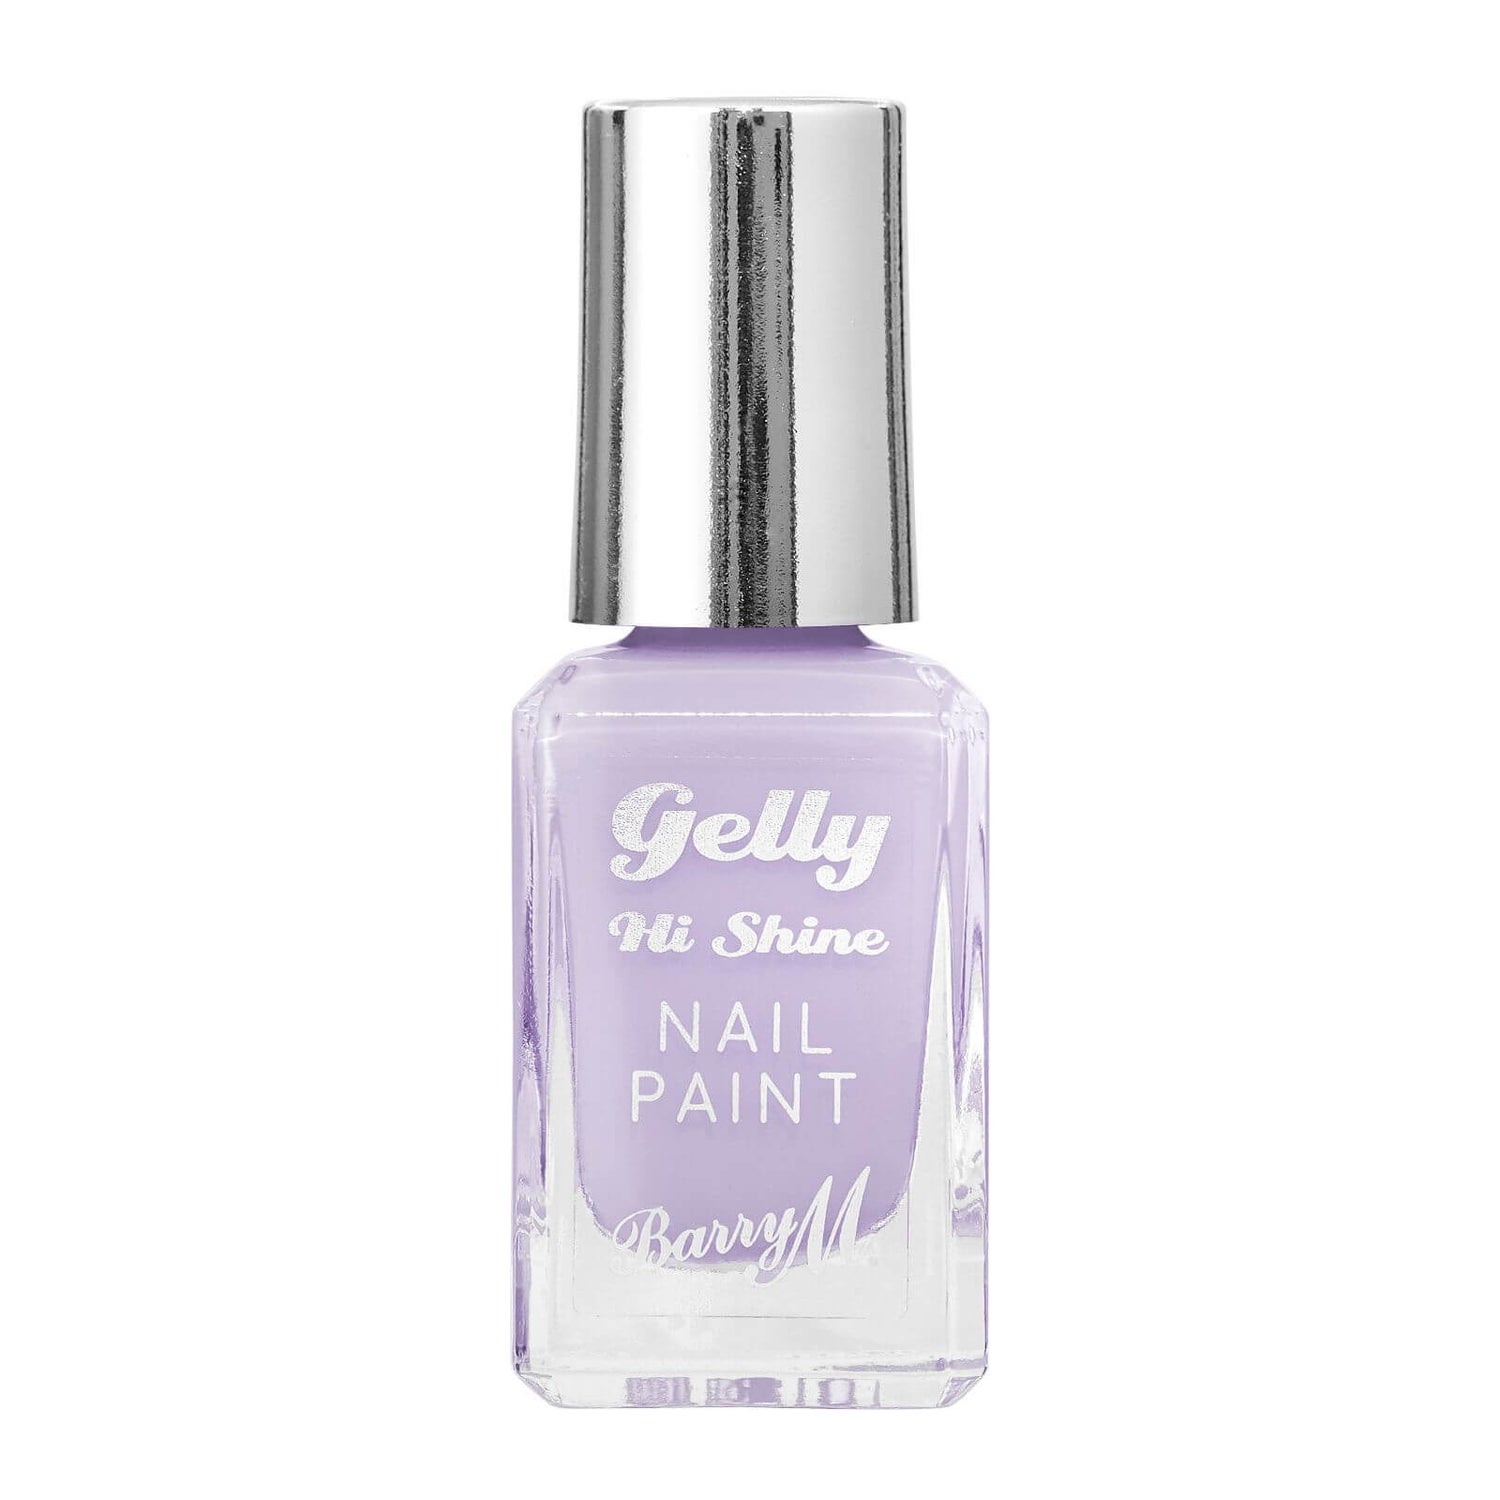 Barry M Cosmetics Gelly Hi Shine Nail Paint 10ml (Various Shades)